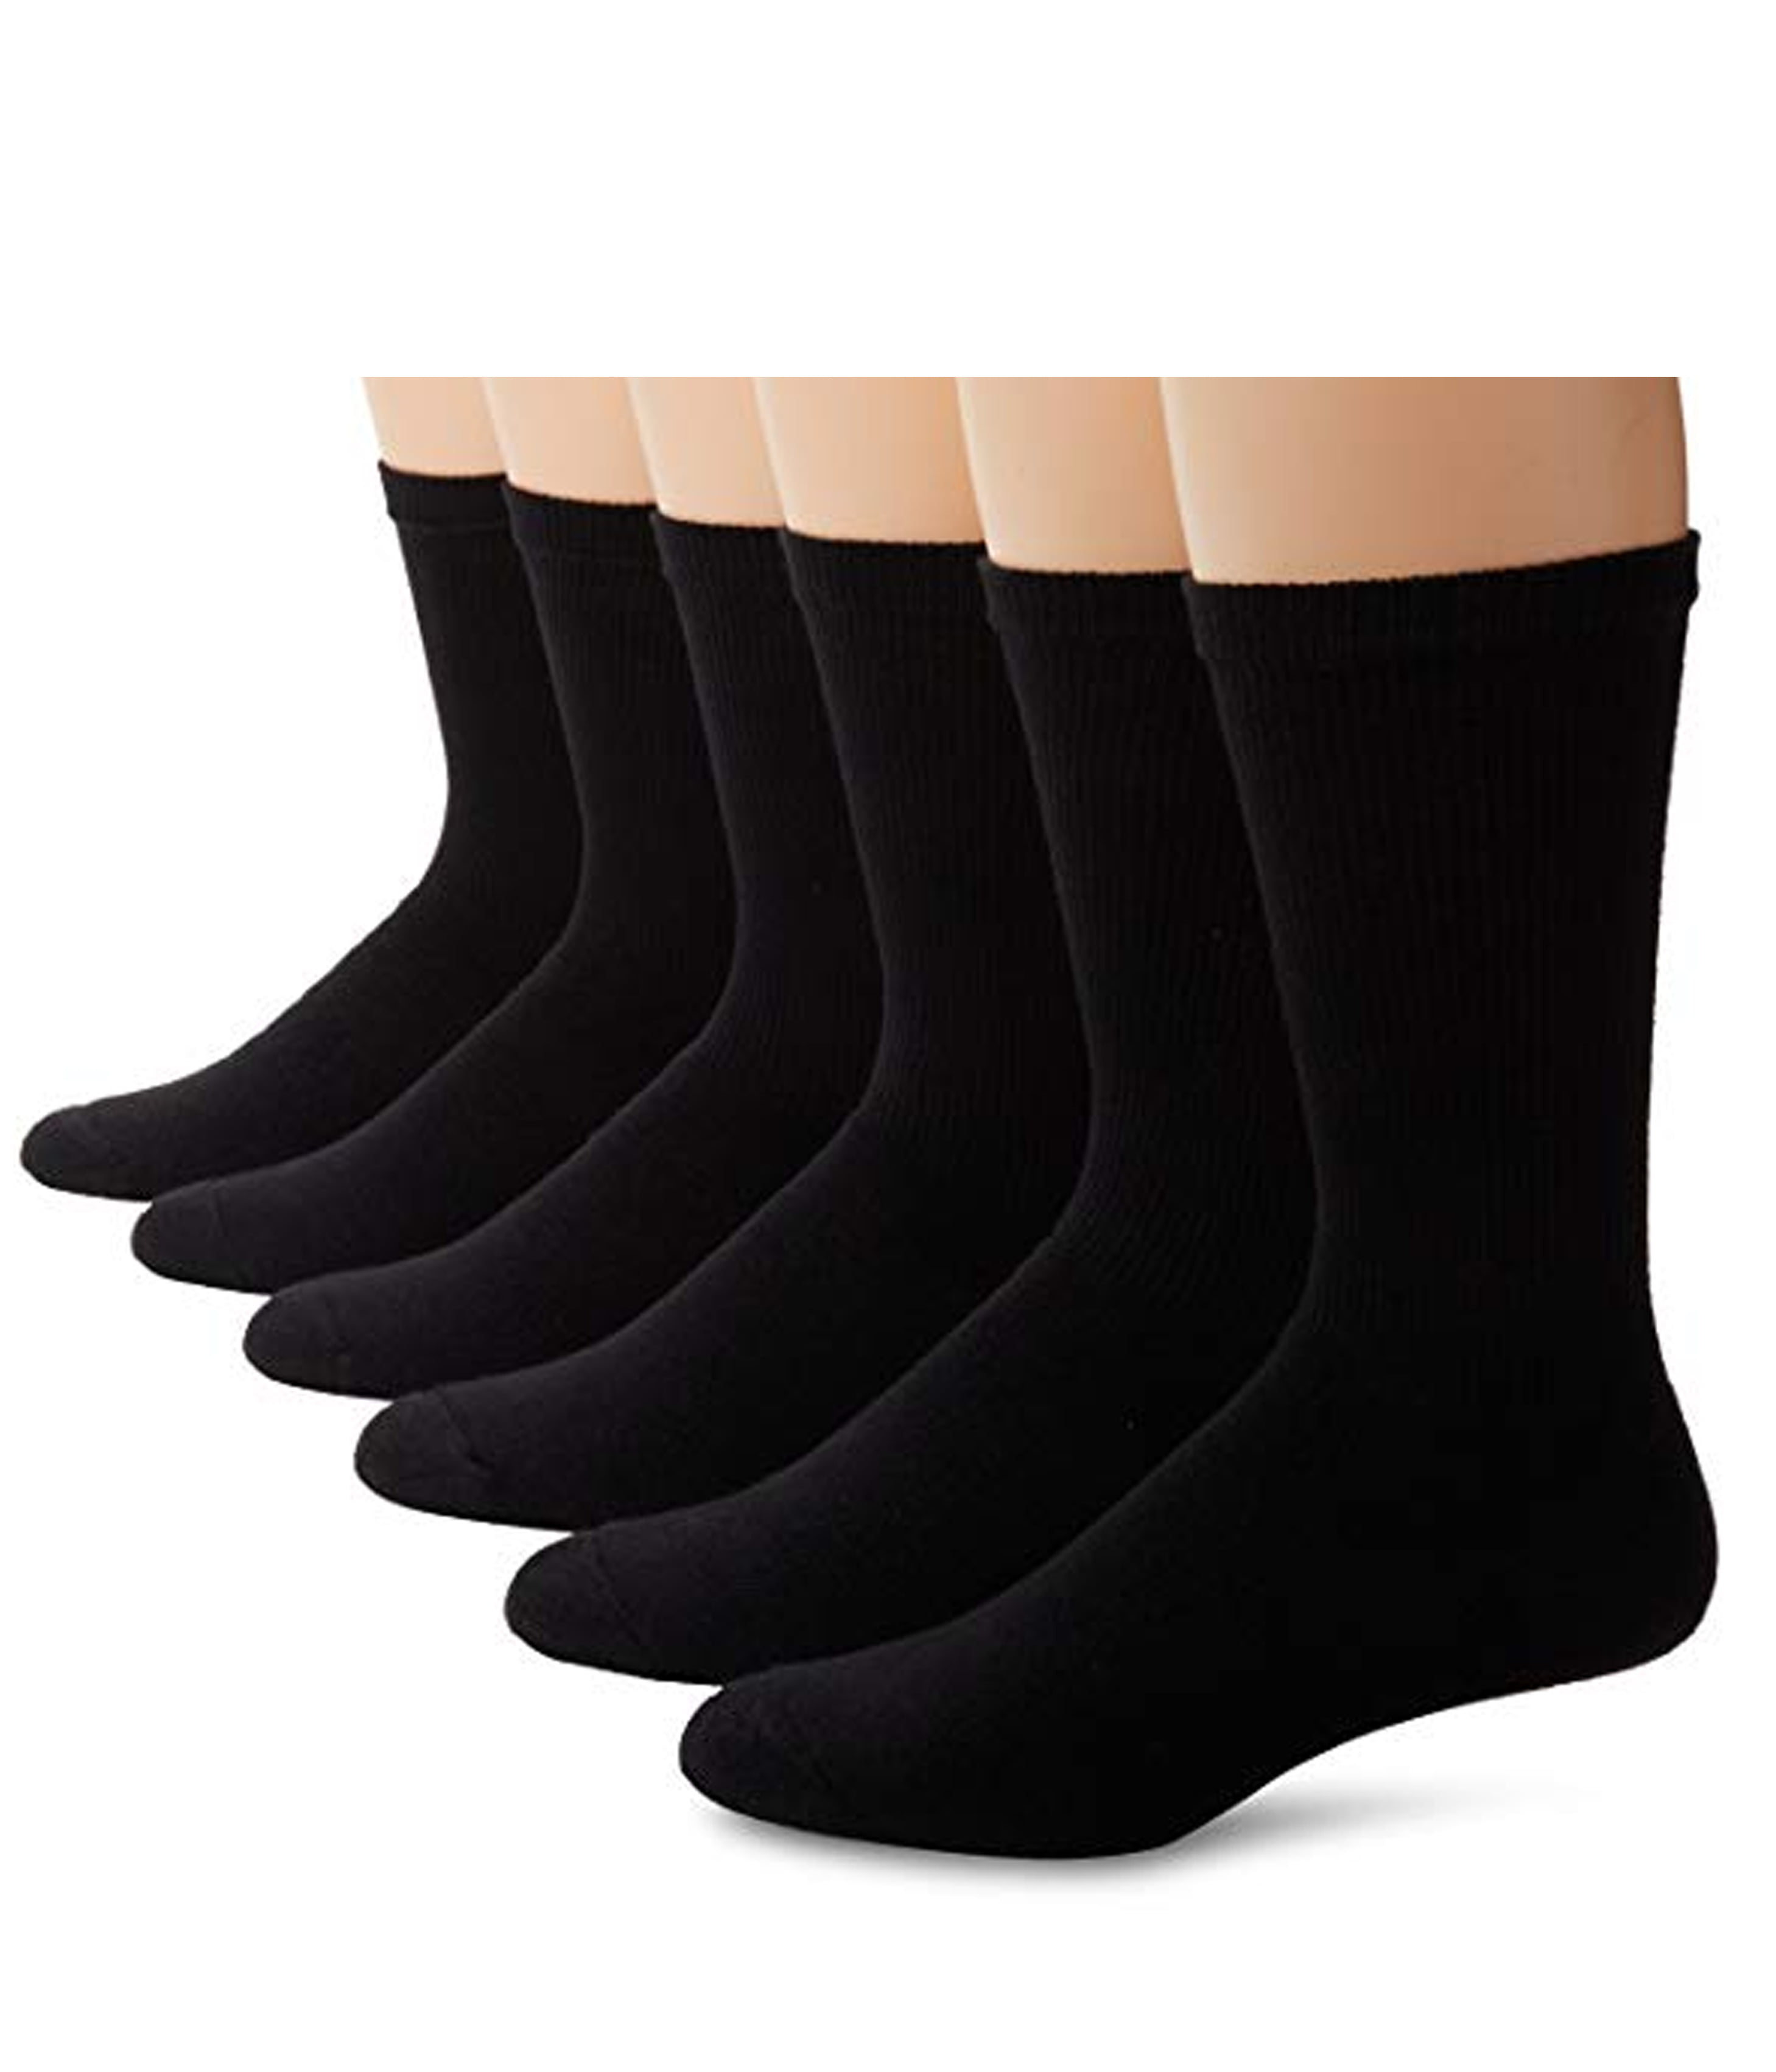 12 Pack Men Crew Casual Sports Cotton Socks White Black Toe Heel Size 10-13